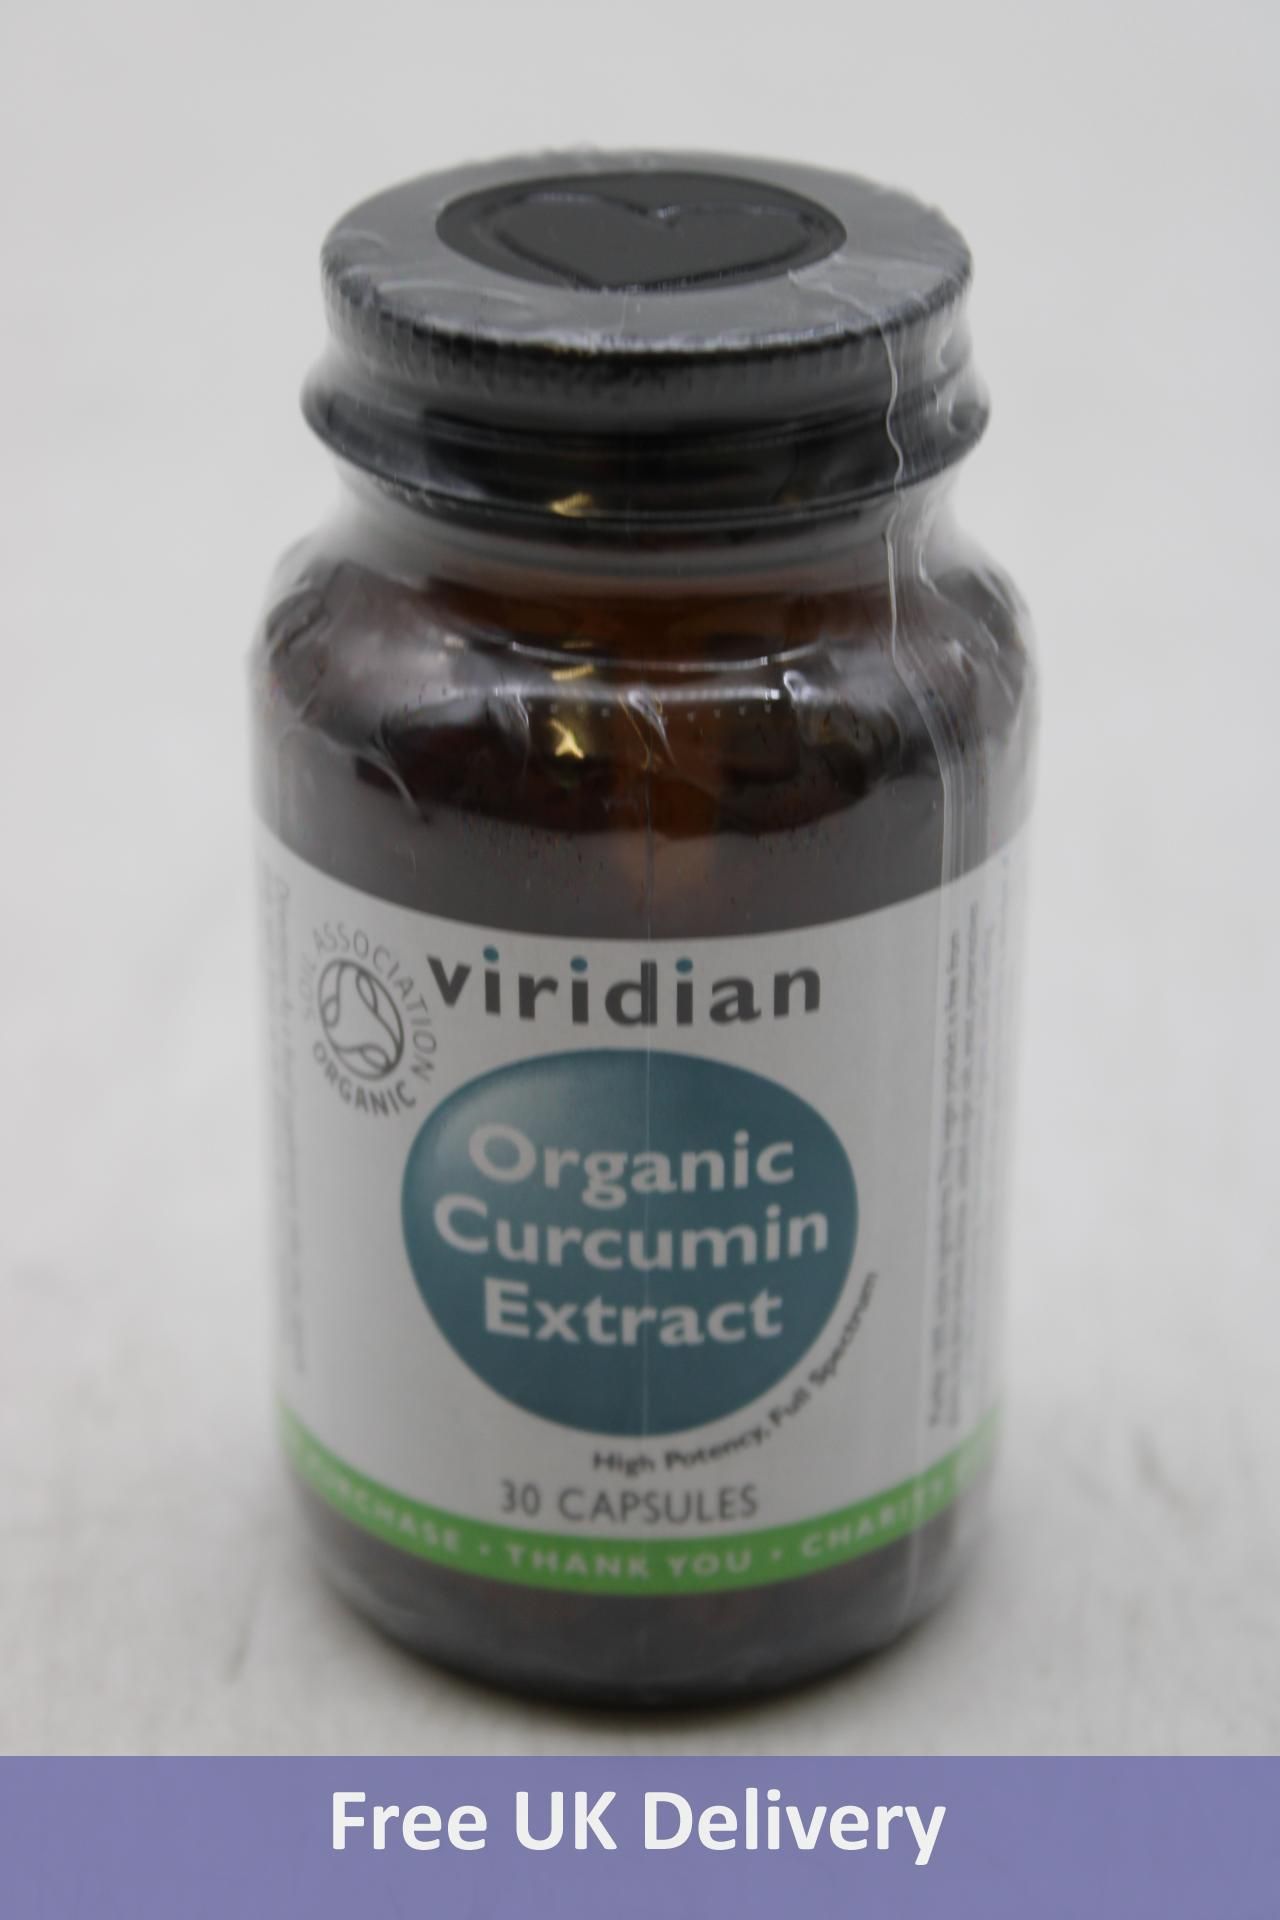 Six Pots of Viridian Organic Curcumin Extract, 30 Capsules per Pots, Expiry 09/2025